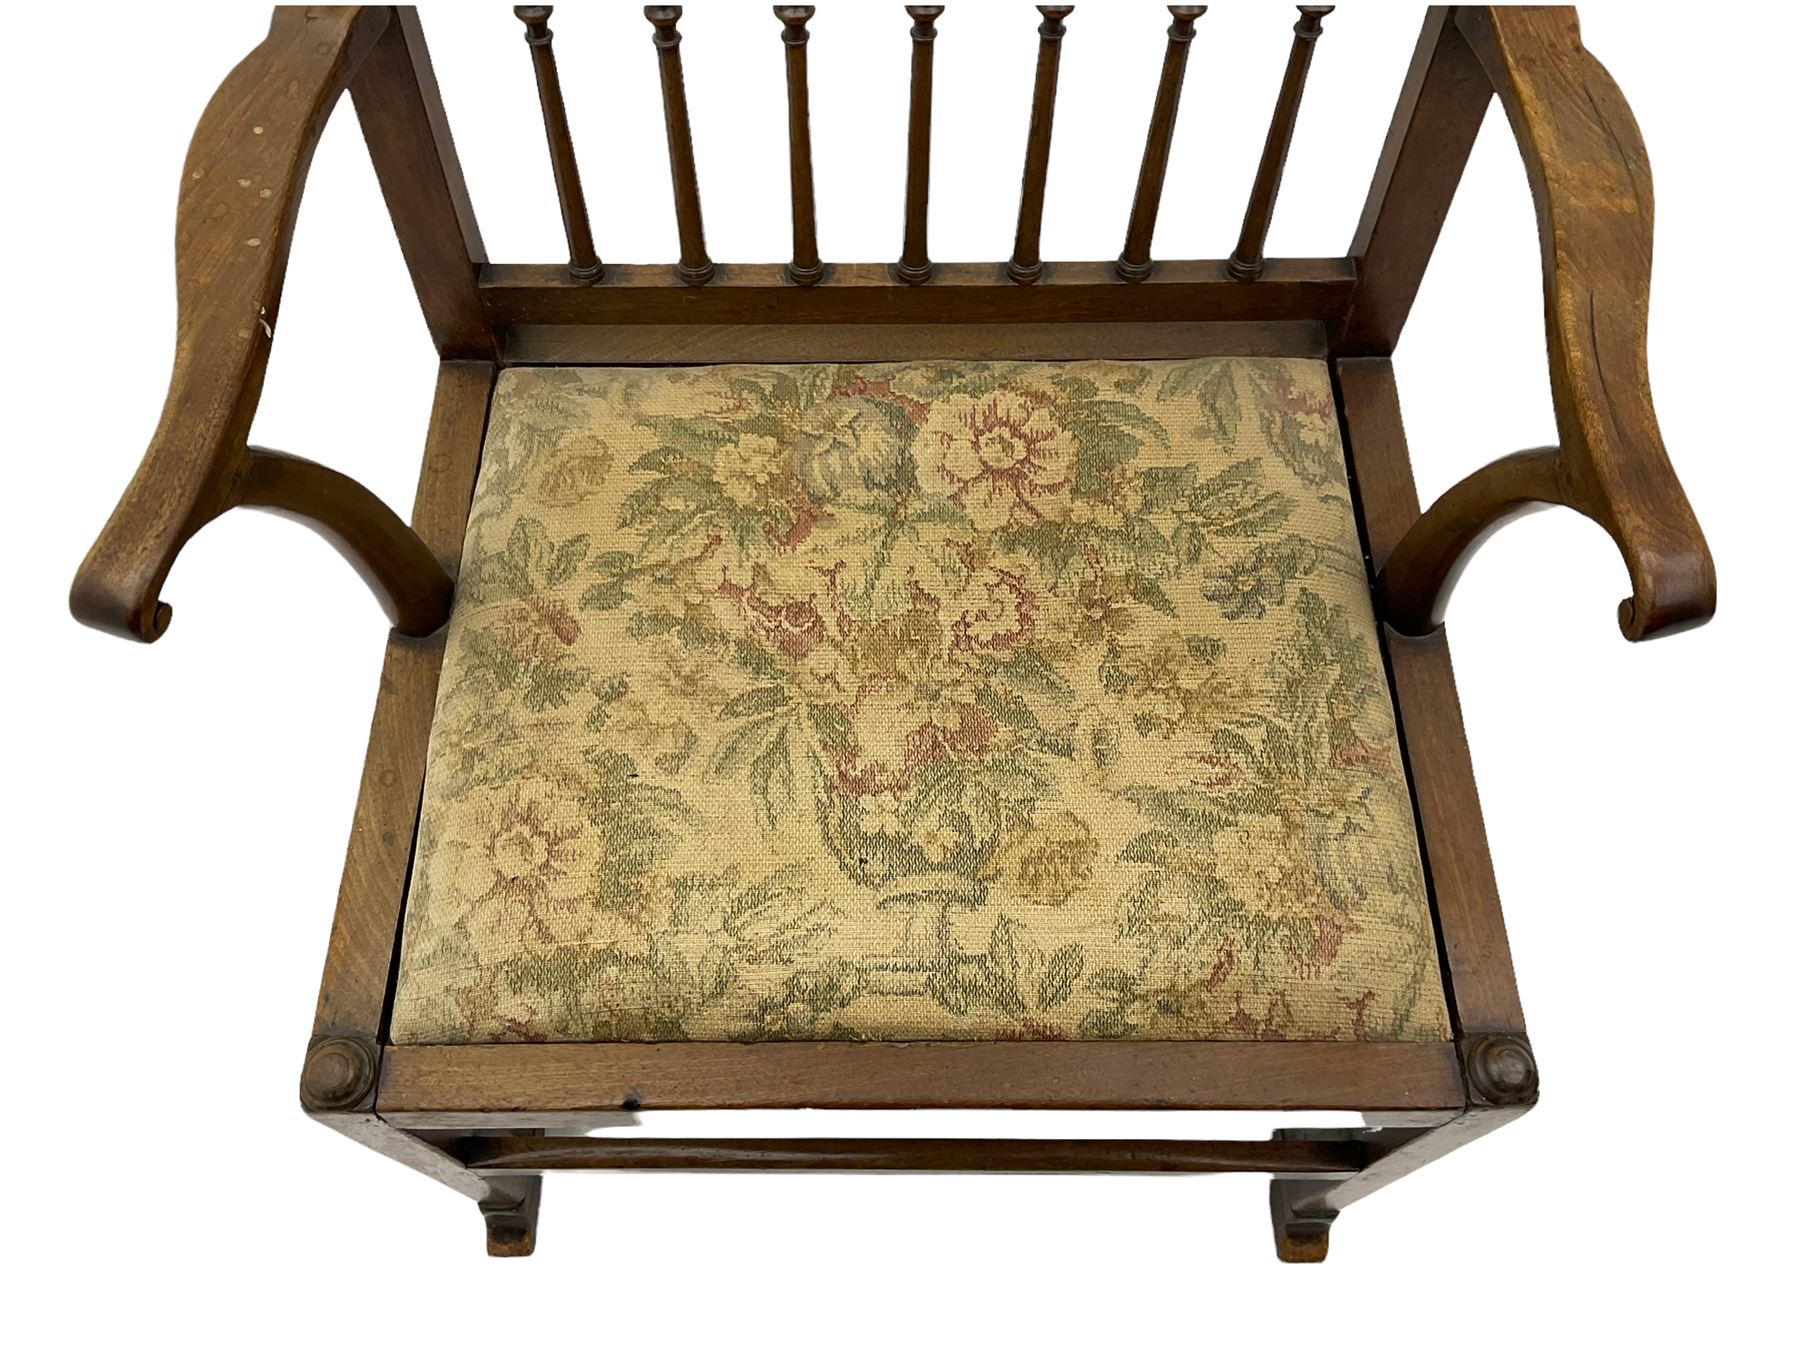 Late 18th century walnut 'Drunkard's' chair - Image 2 of 5